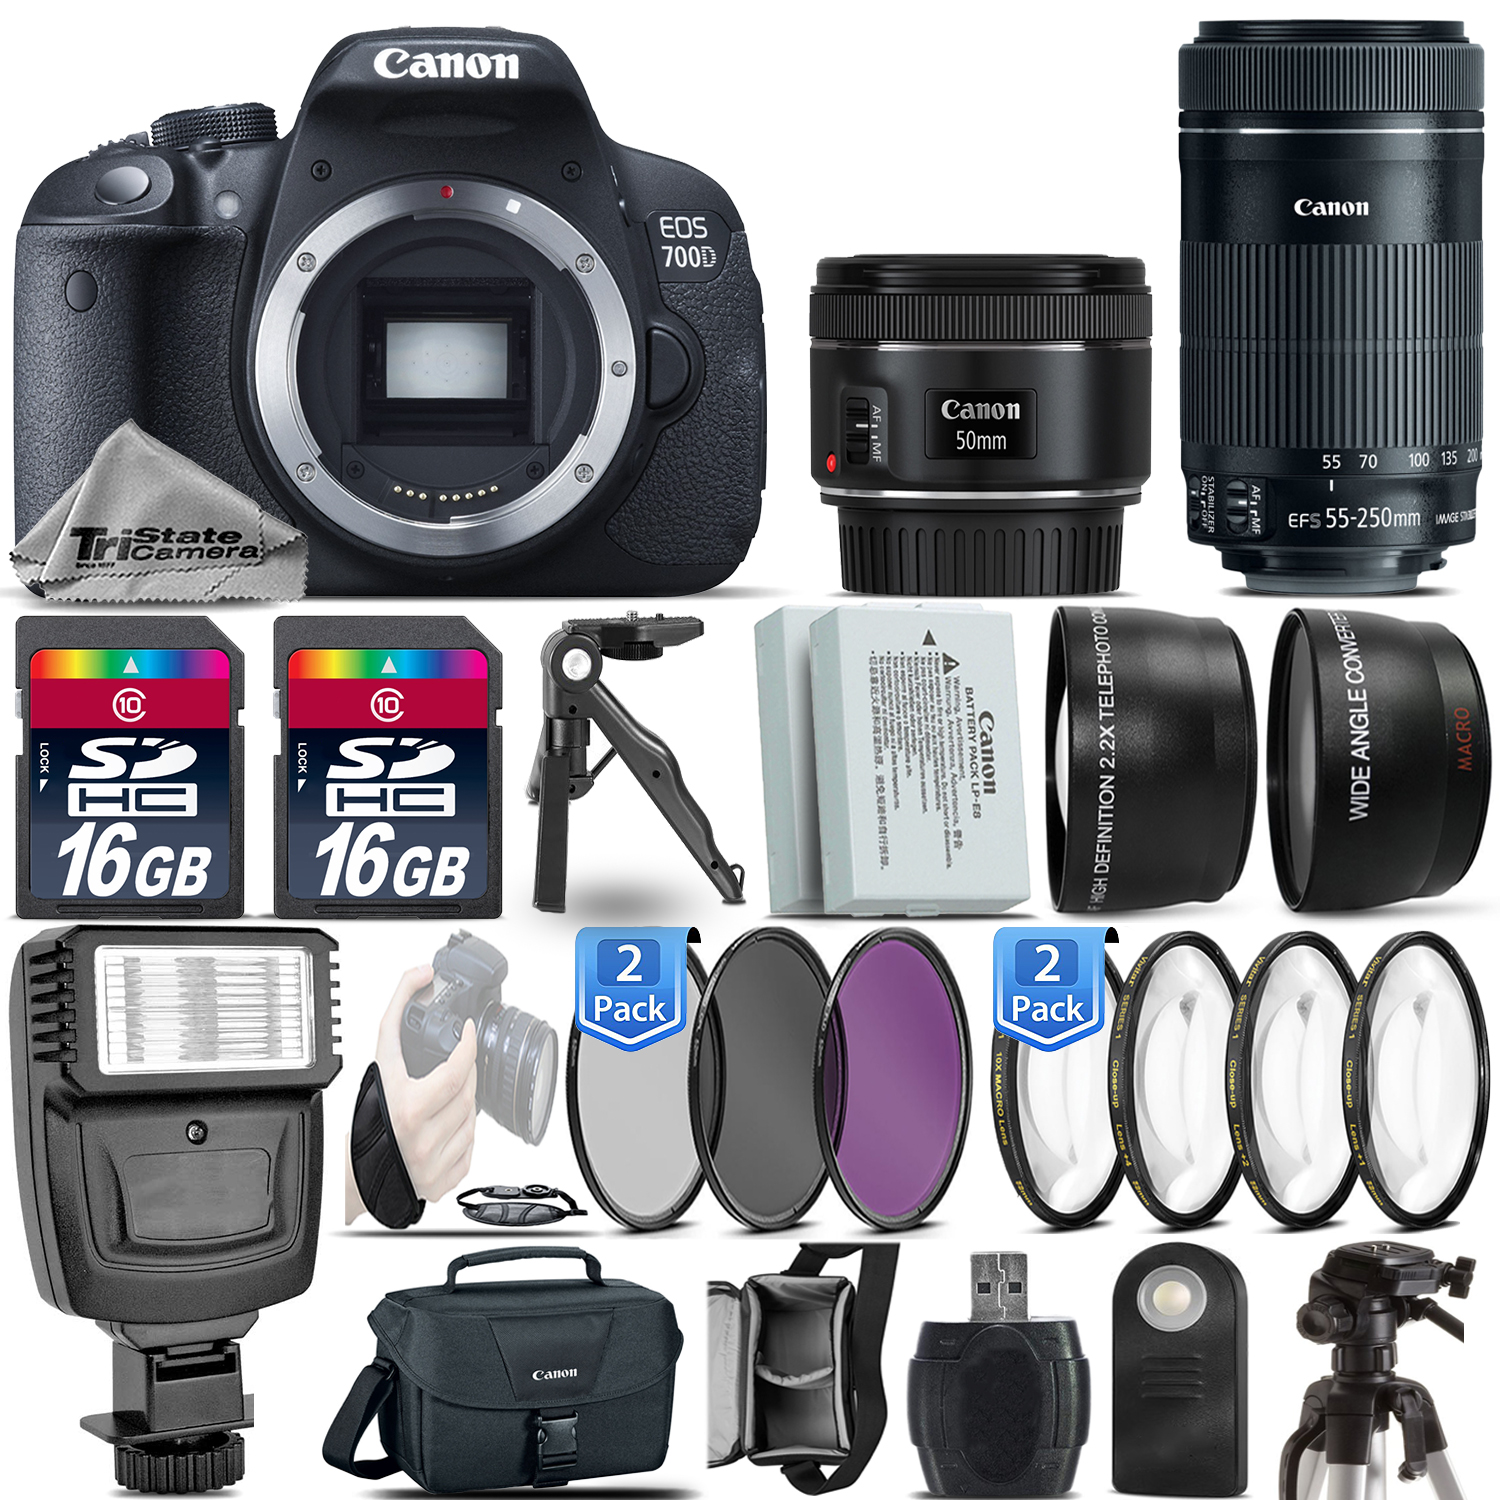 EOS Rebel 700D / T5i Camera + 50mm 1.8 + 55-250mm STM + EXT BAT - 32GB Kit *FREE SHIPPING*